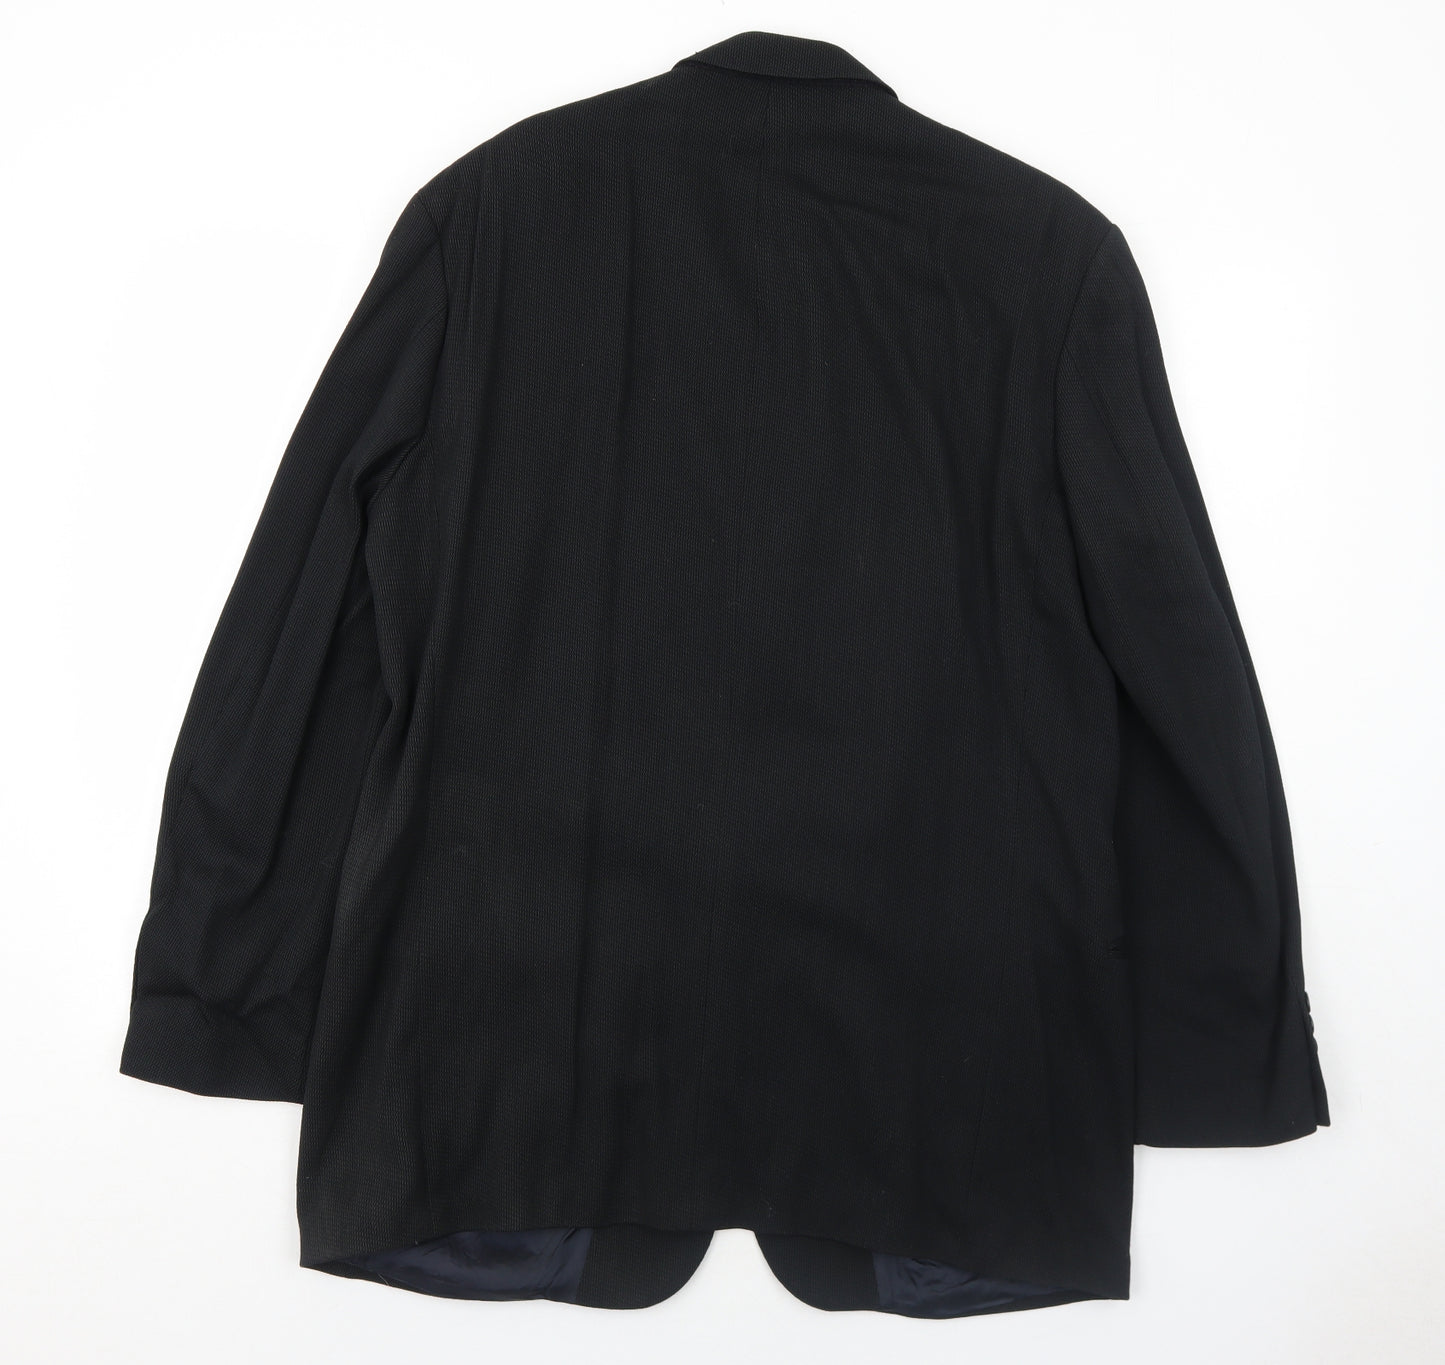 HUGO BOSS Mens Black Wool Jacket Suit Jacket Size 46 Regular